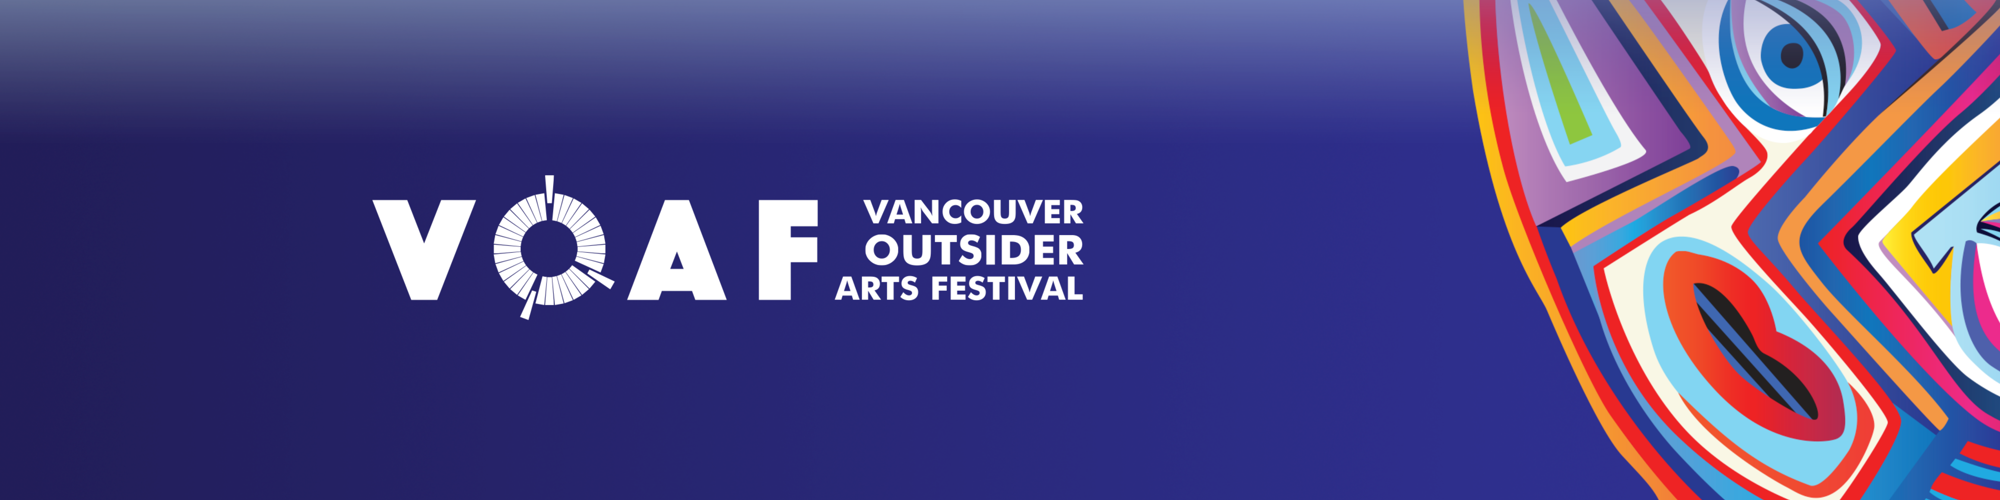 Vancouver Outsider Arts Festival